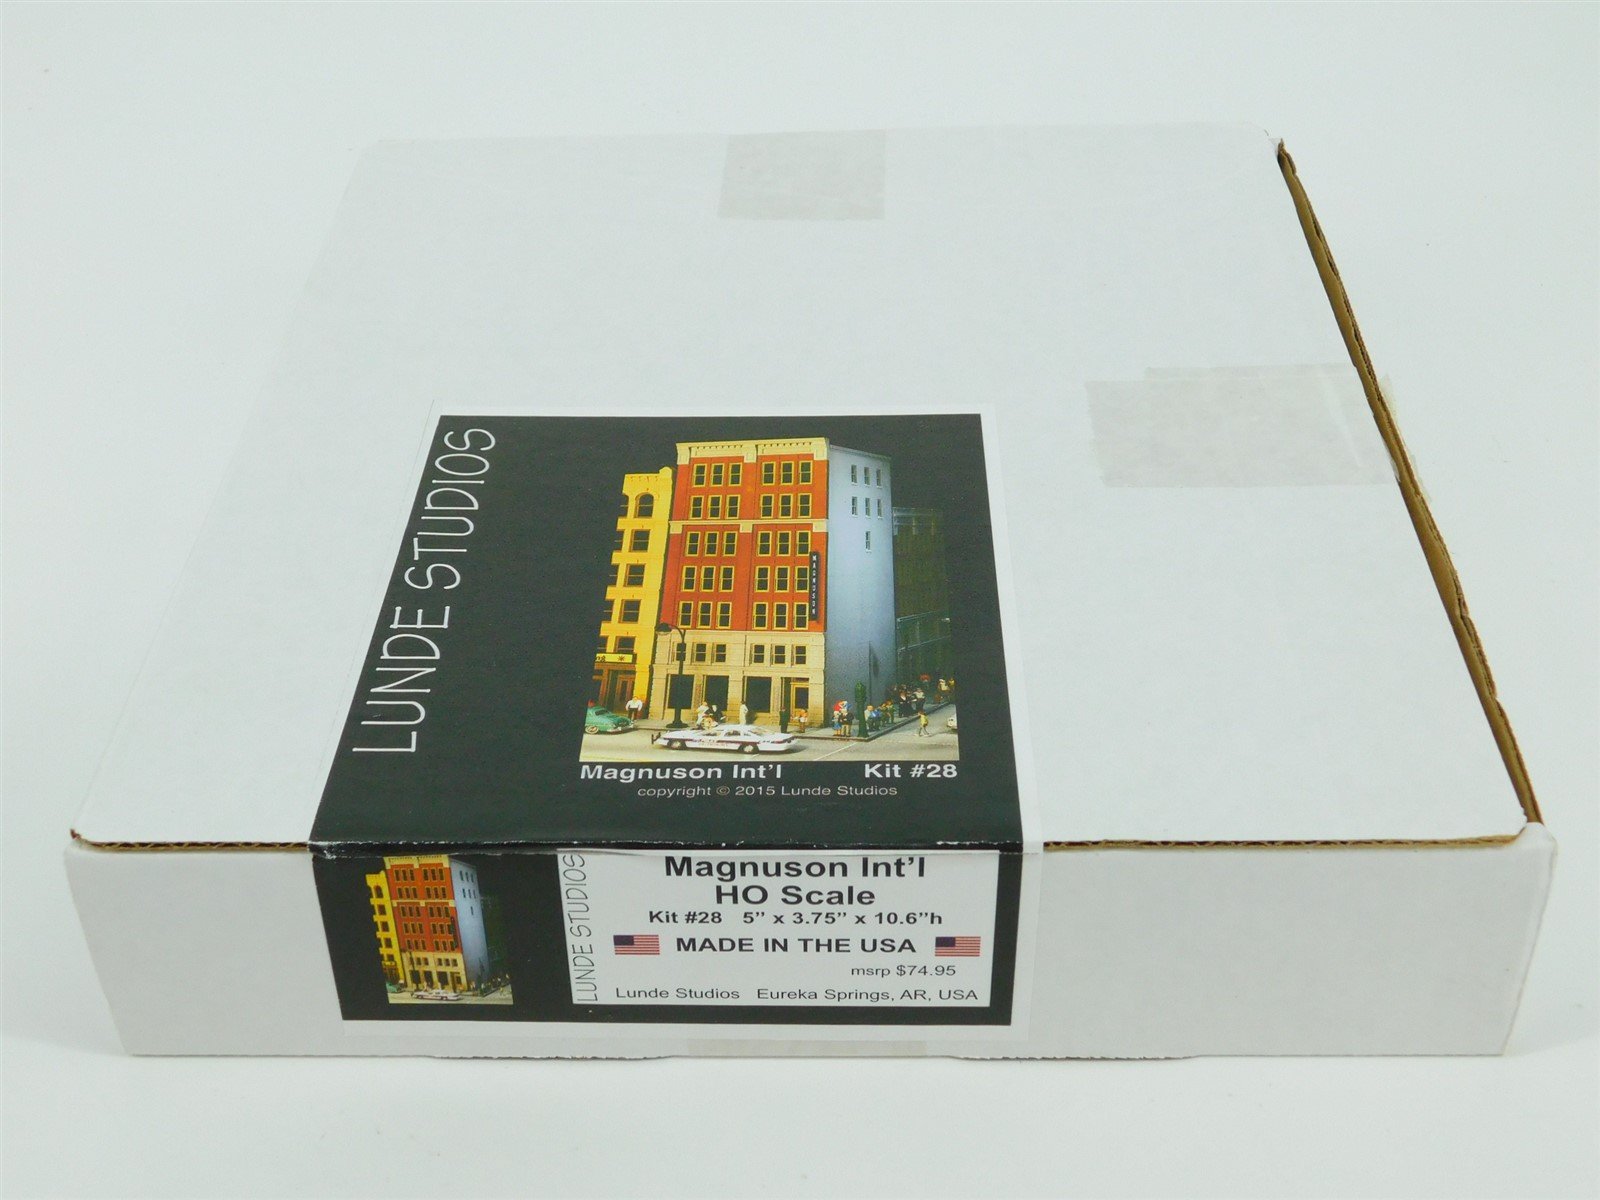 HO 1/87 Scale Lunde Studios Resin Kit #28 "Magnuson Int'l" Building